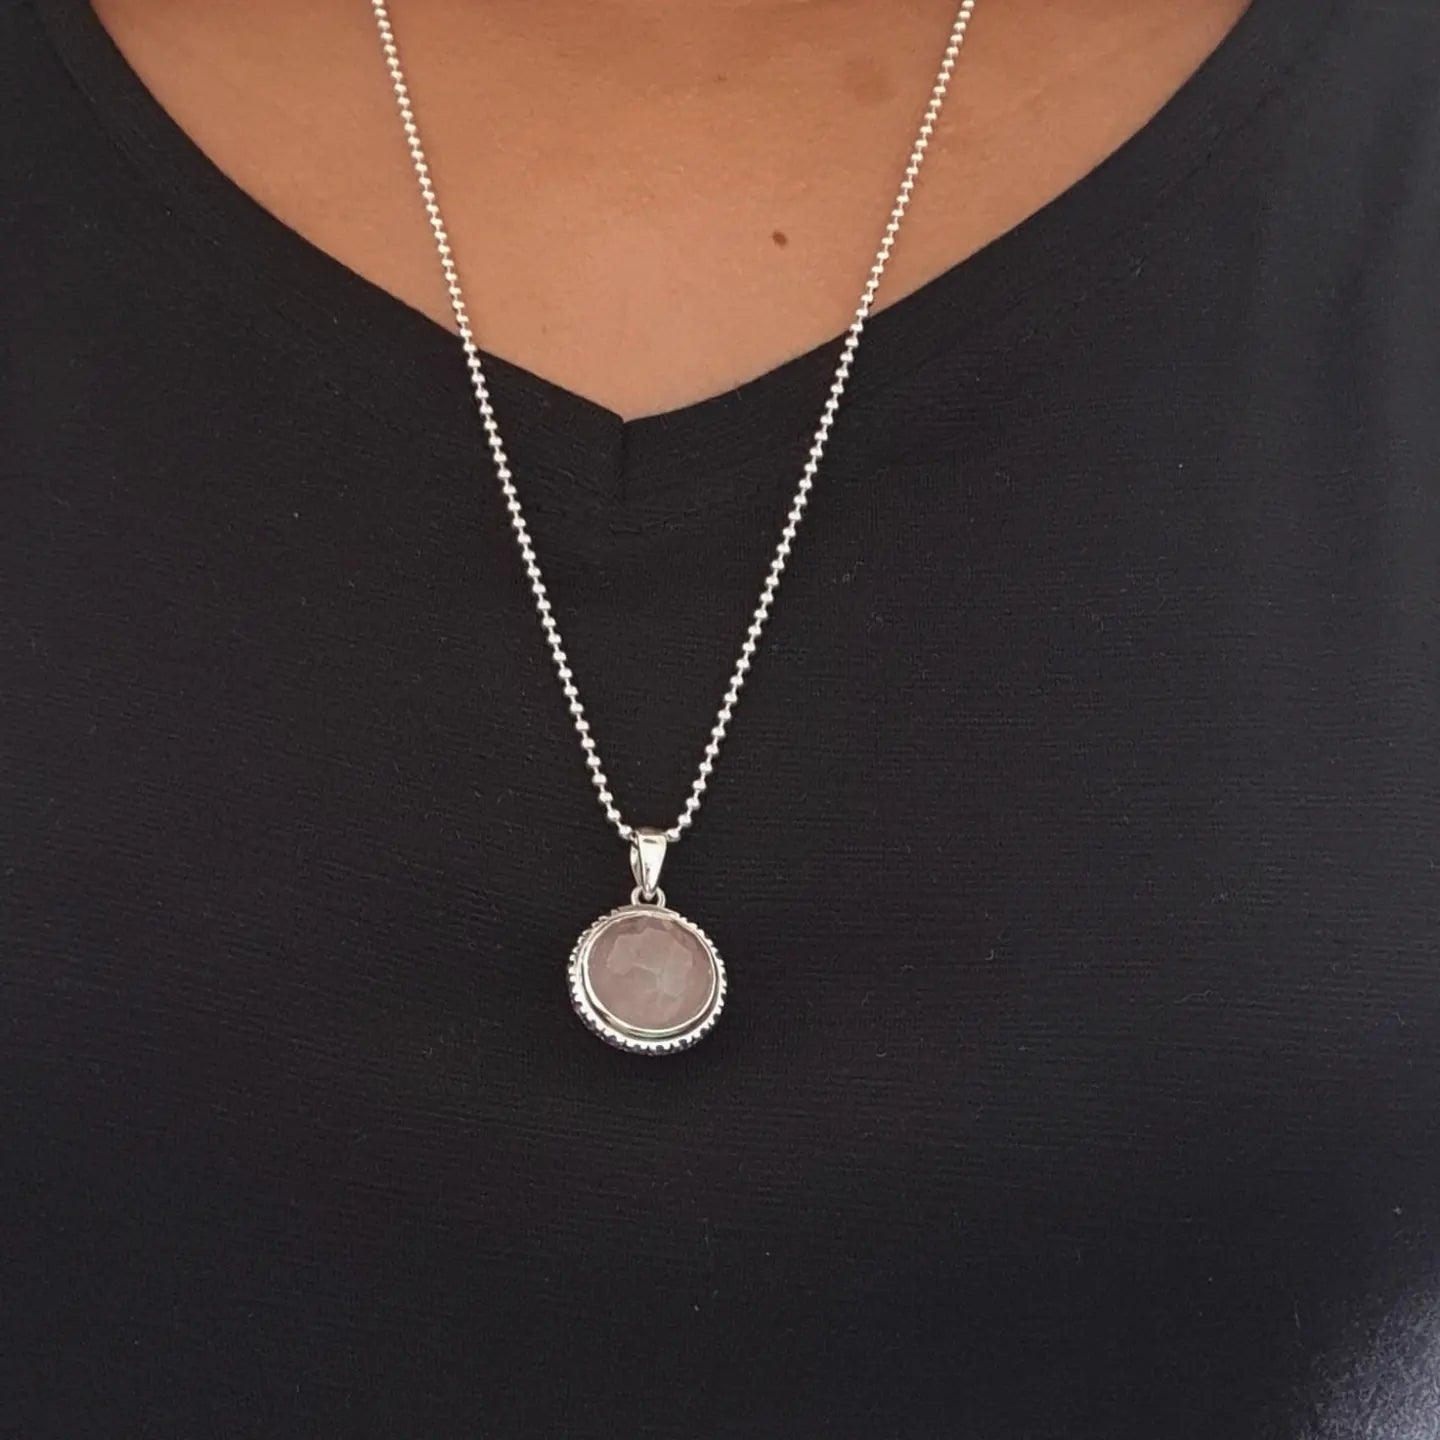 Maudrey Necklace Bali Silver 925 Rose Quartz And Amethyst Stones